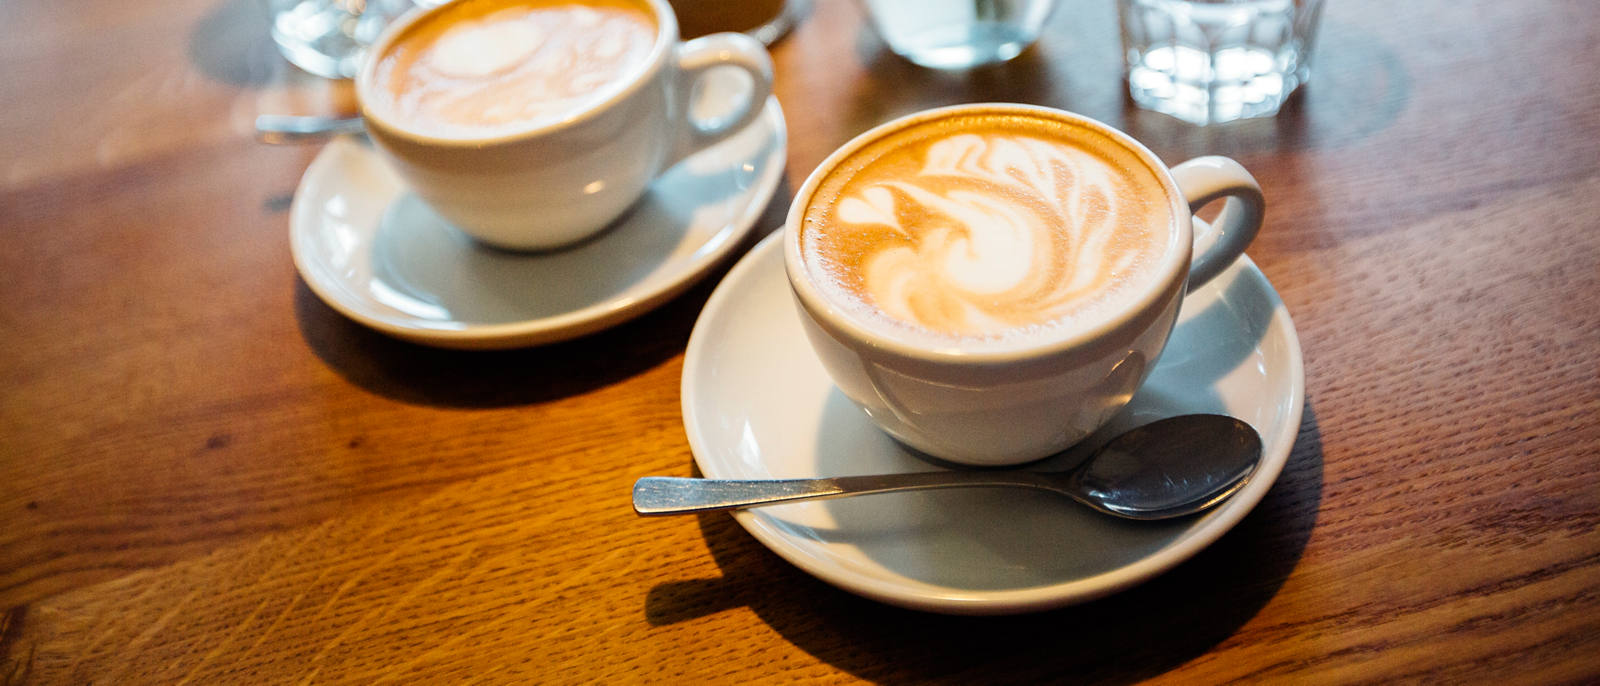 Mythos 1: Entzieht Kaffee dem Körper Wasser?